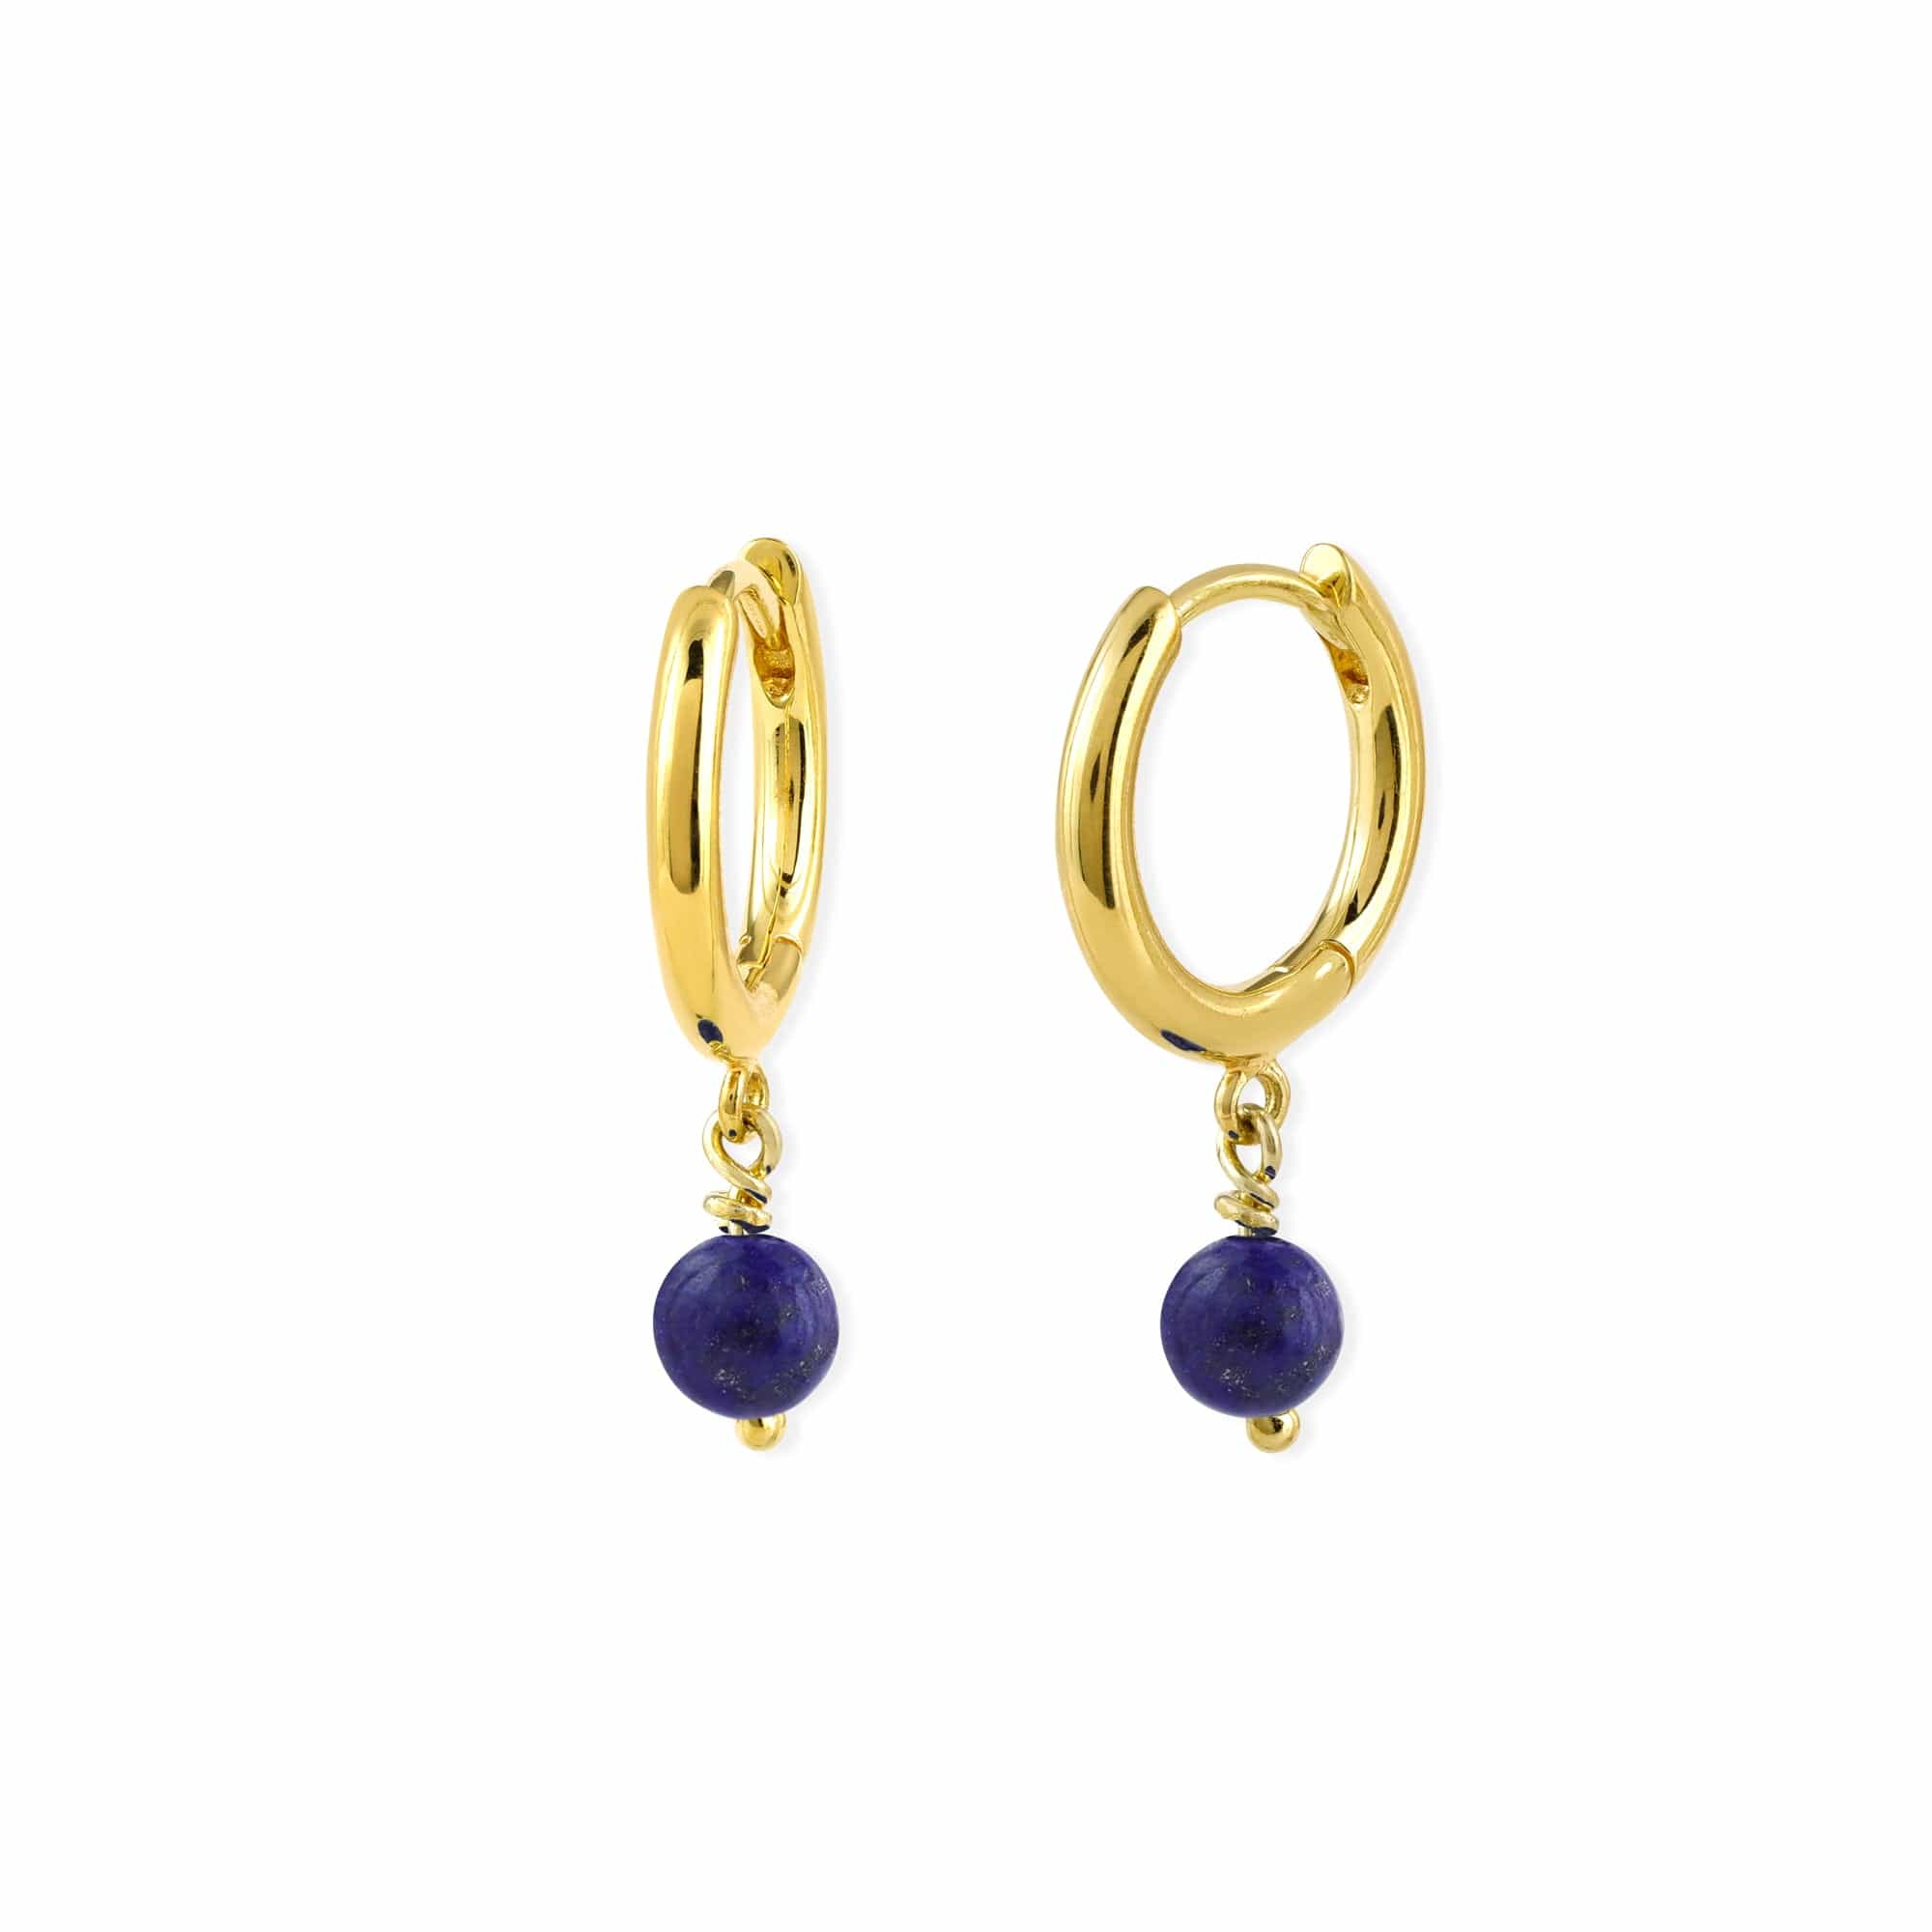 Boma Jewelry Earrings Lapis Lazuli / 14K Gold Plated Treasured Drop Huggies